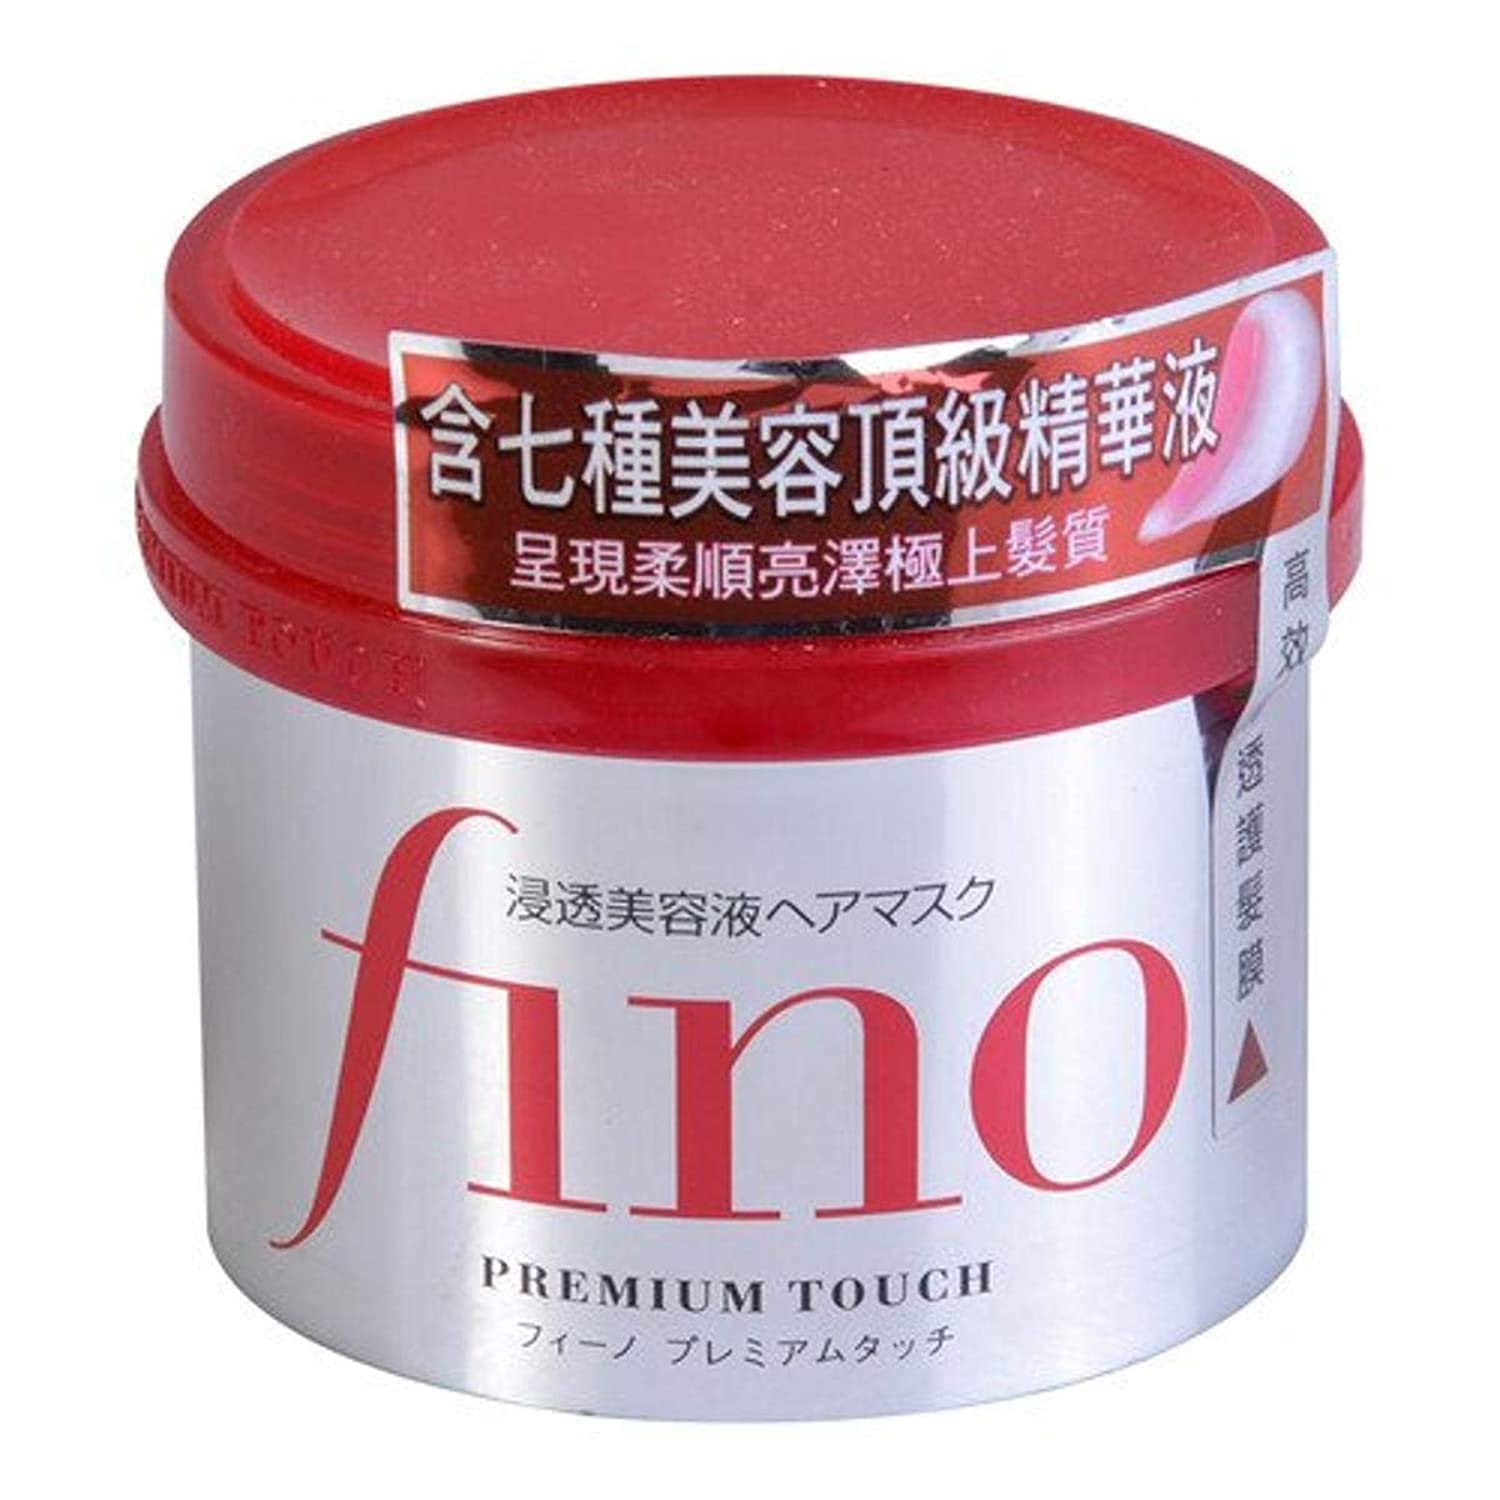 Shiseido Fino Premium Touch Hair Mask 230g packaging